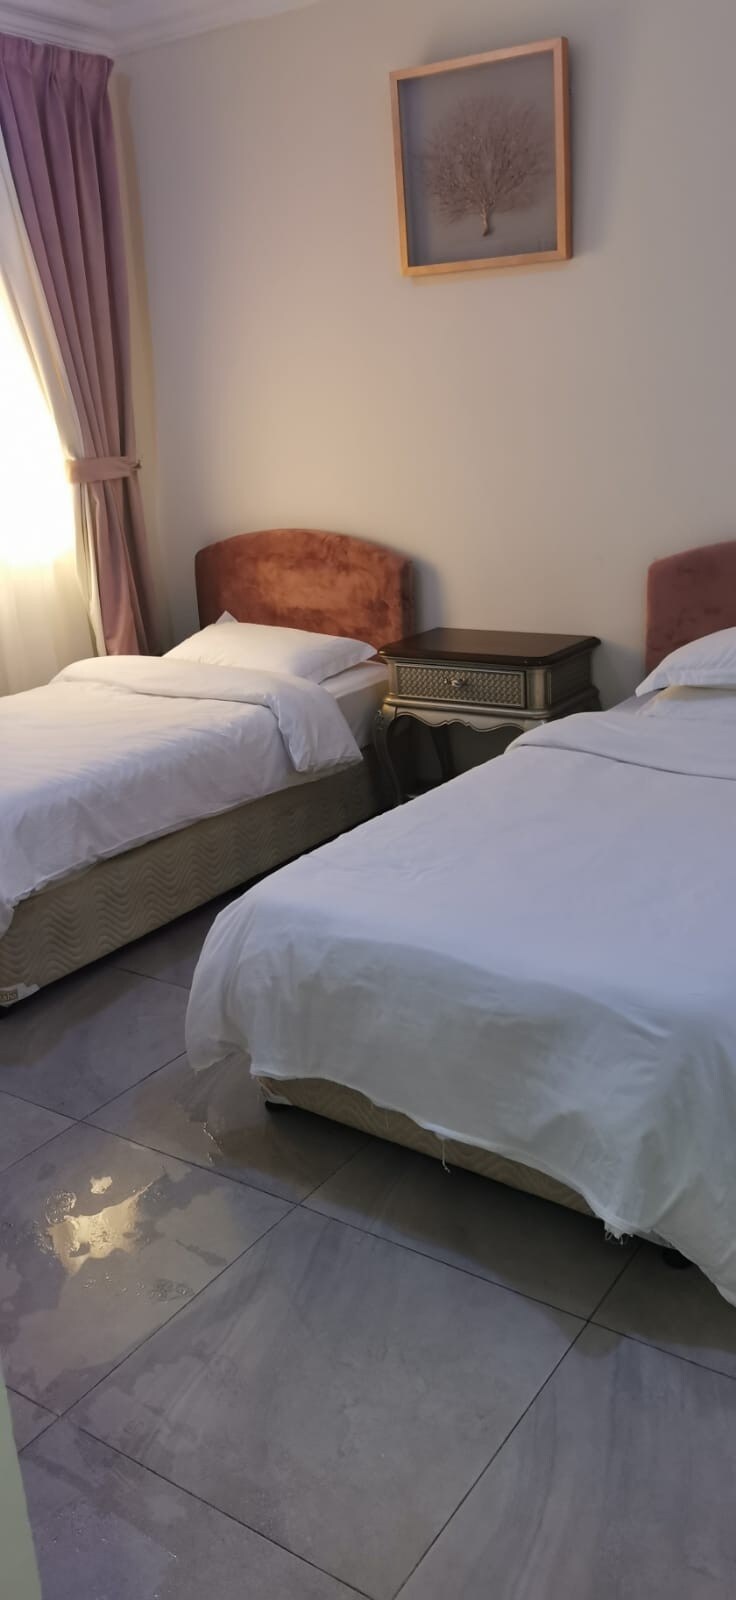 Hotel apartment(bed speac